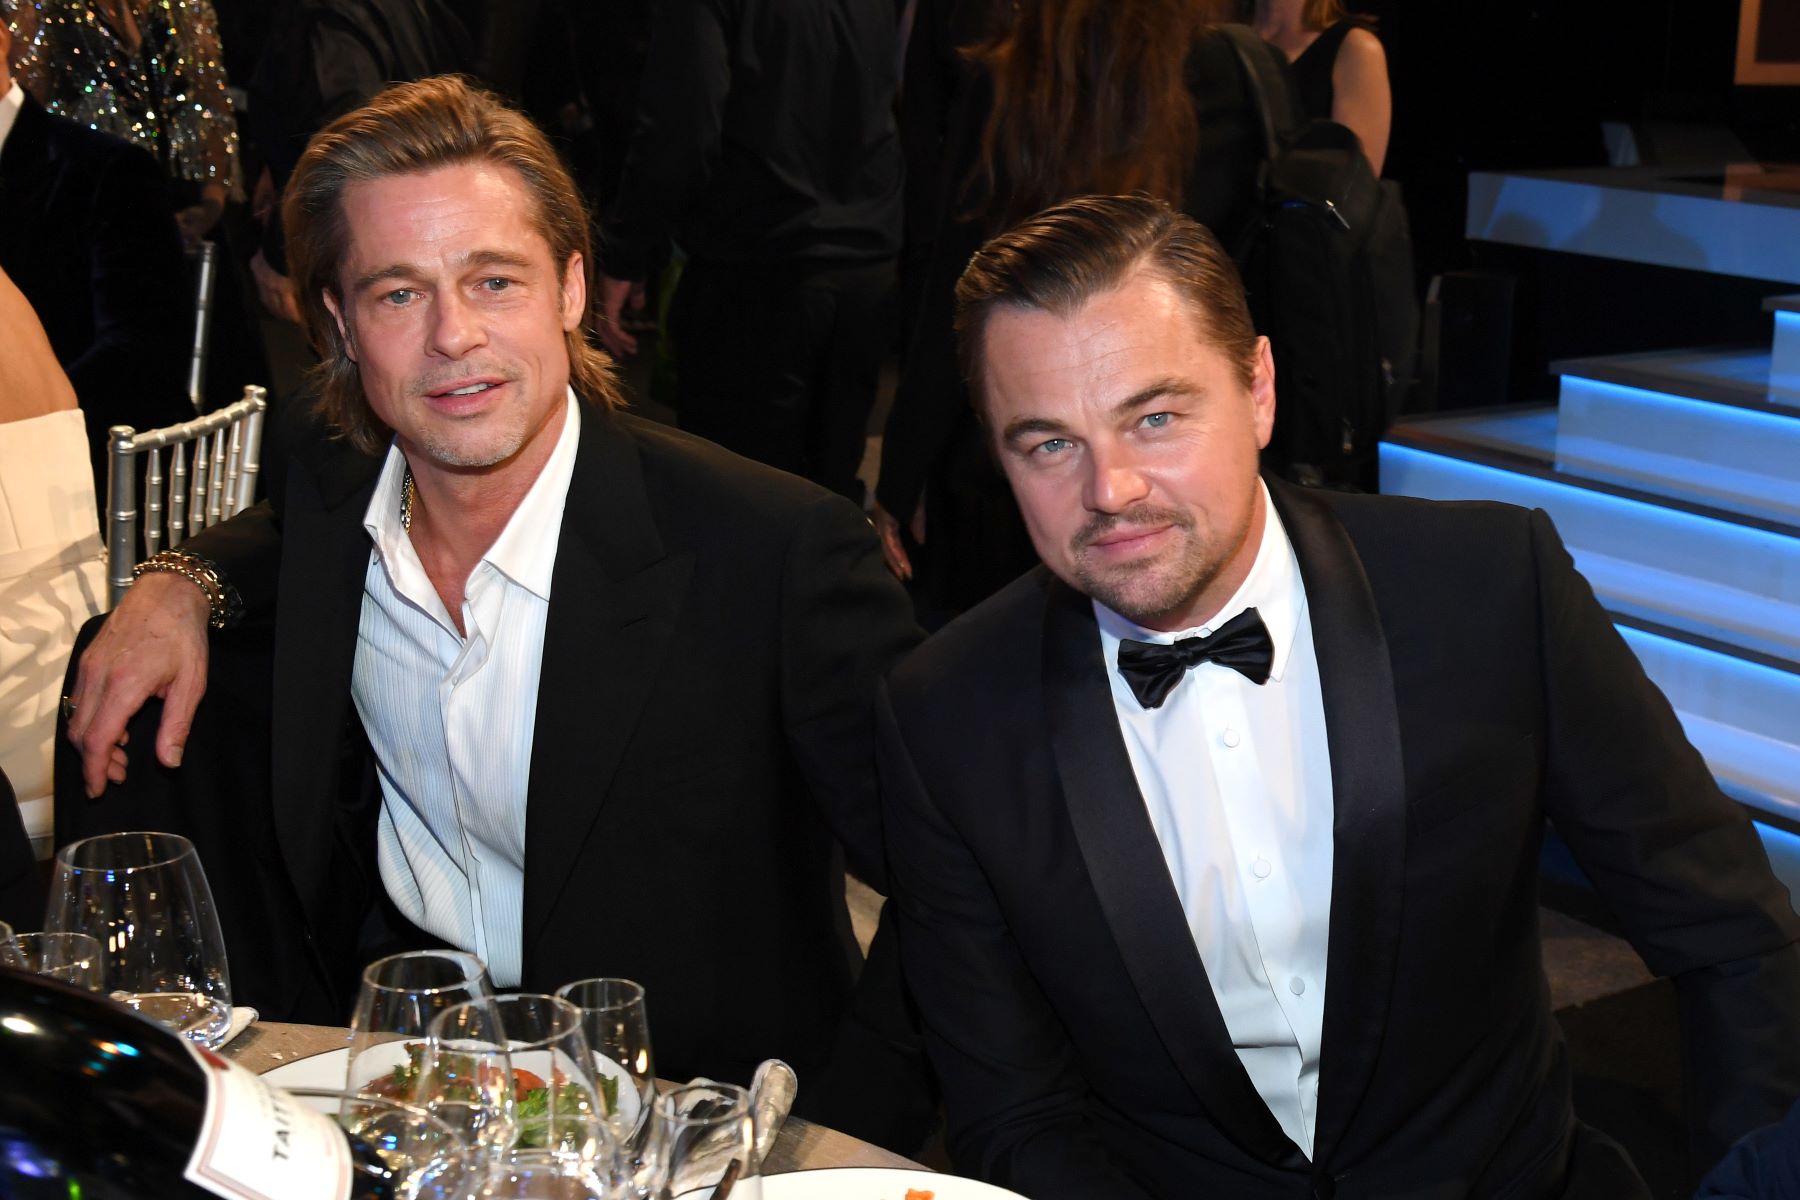 Brad Pitt and Leonardo DiCaprio attending the 26th Annual Screen Actors Guild Awards in Los Angeles, California